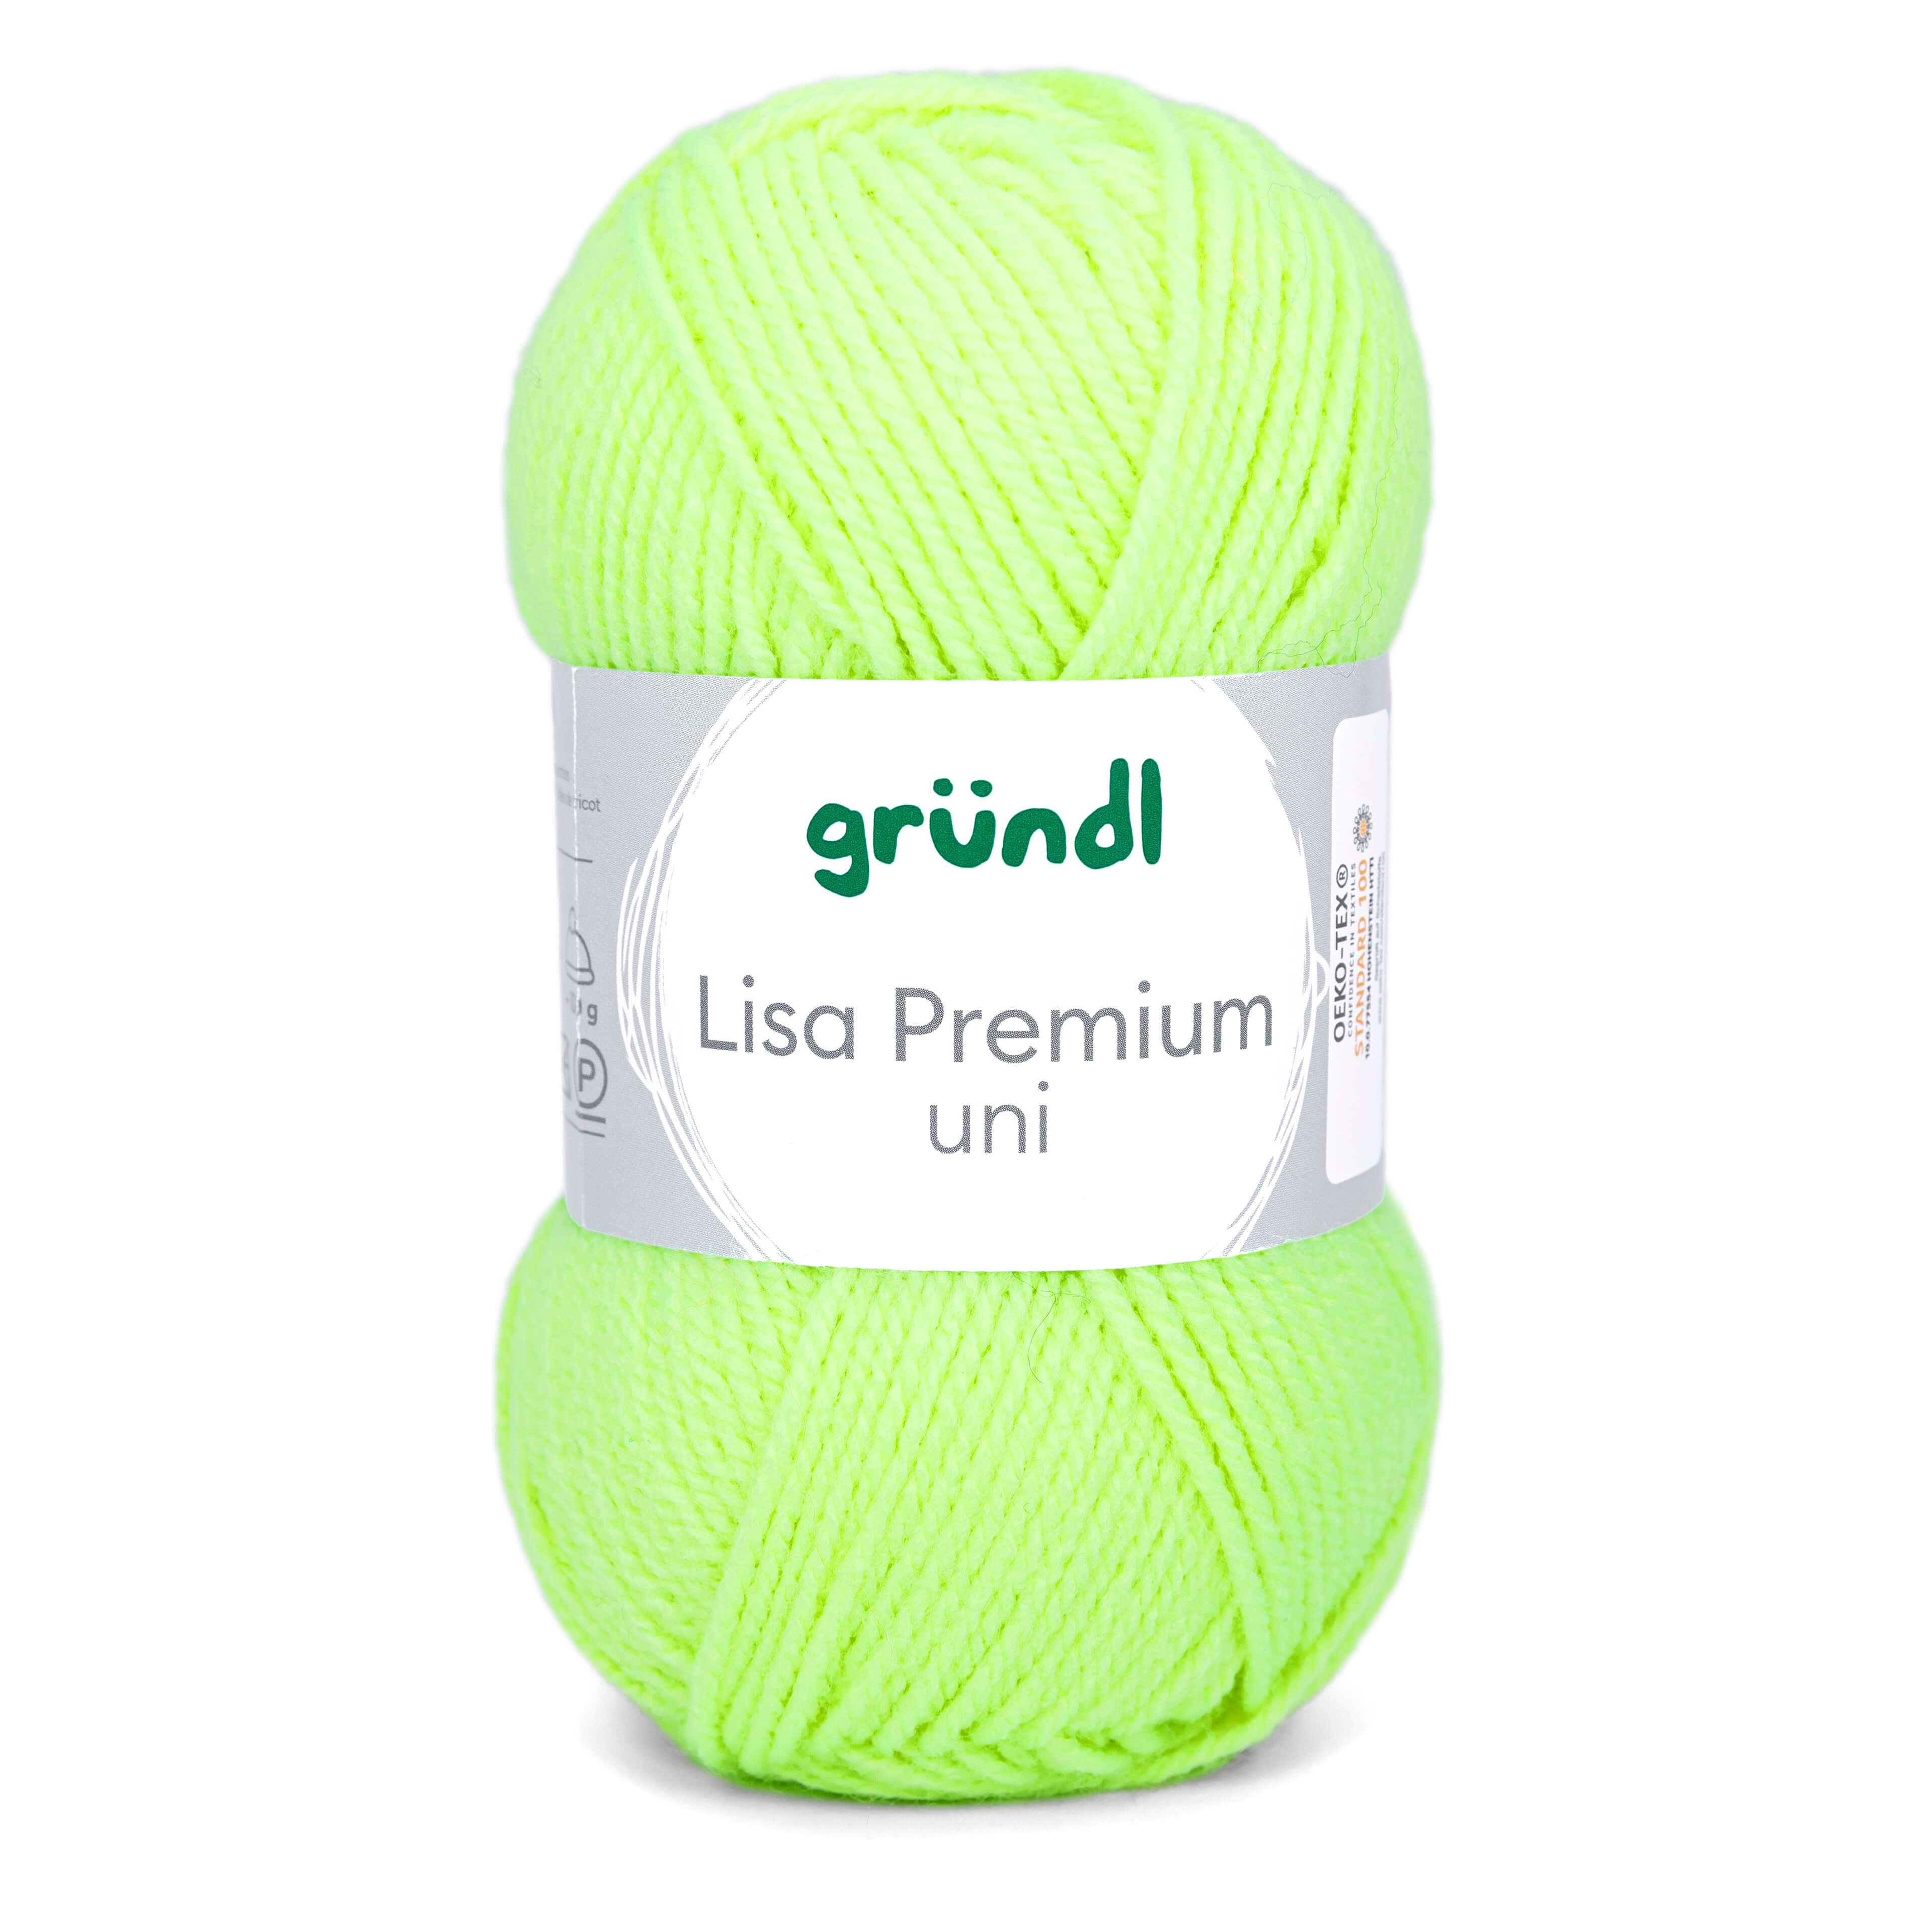 Lisa Premium uni